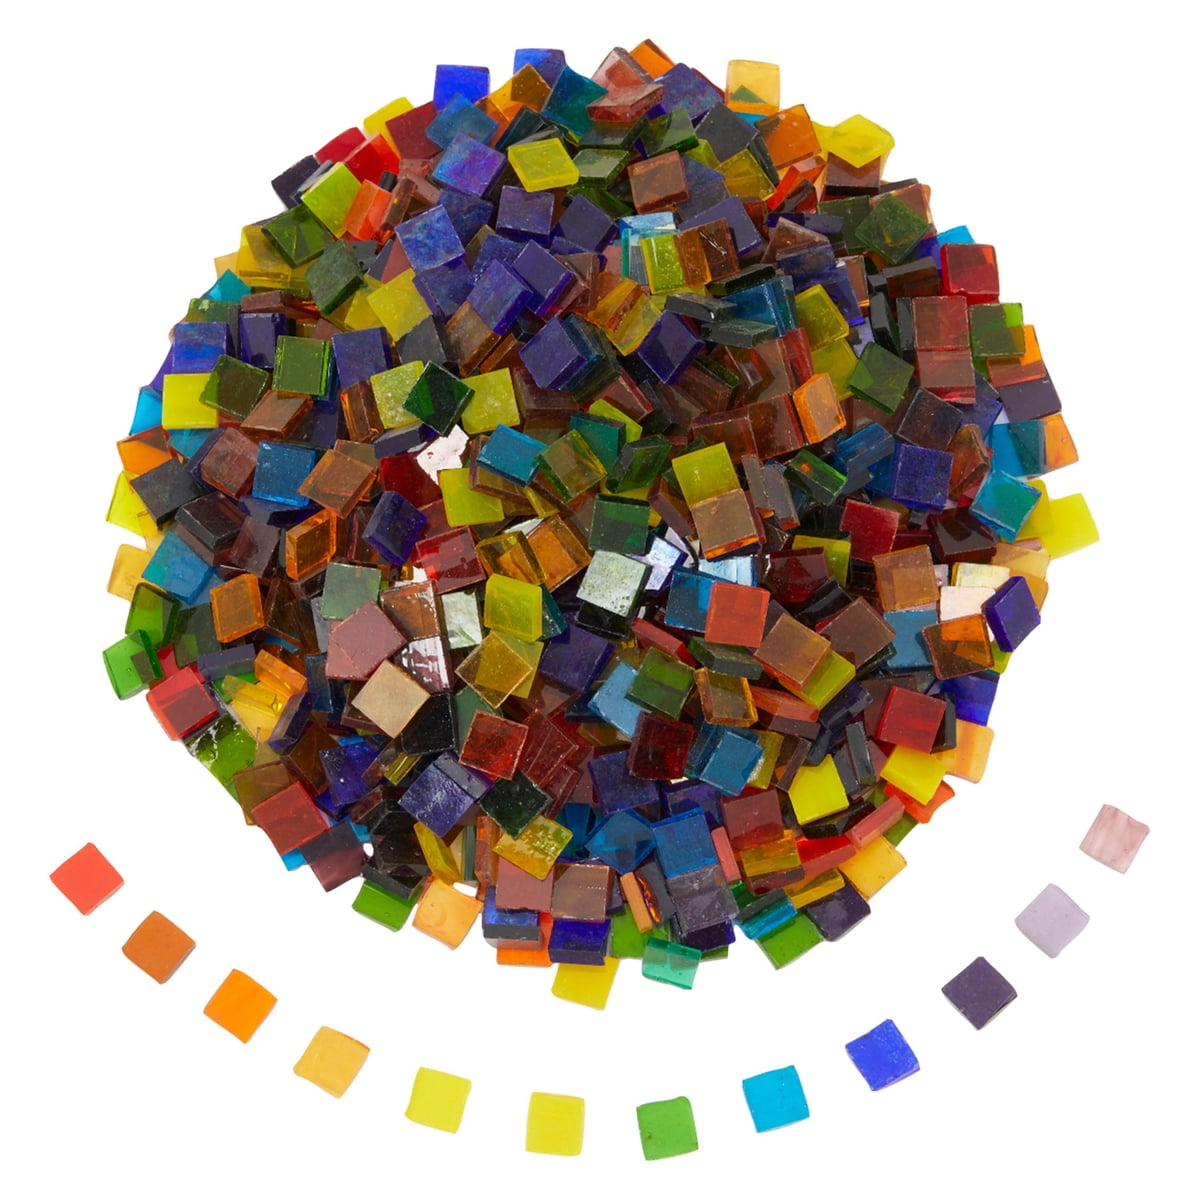 3D Mosaic Tiles Glass DIY Craft Kit Art Creation Kids School Projects Sale 100g 